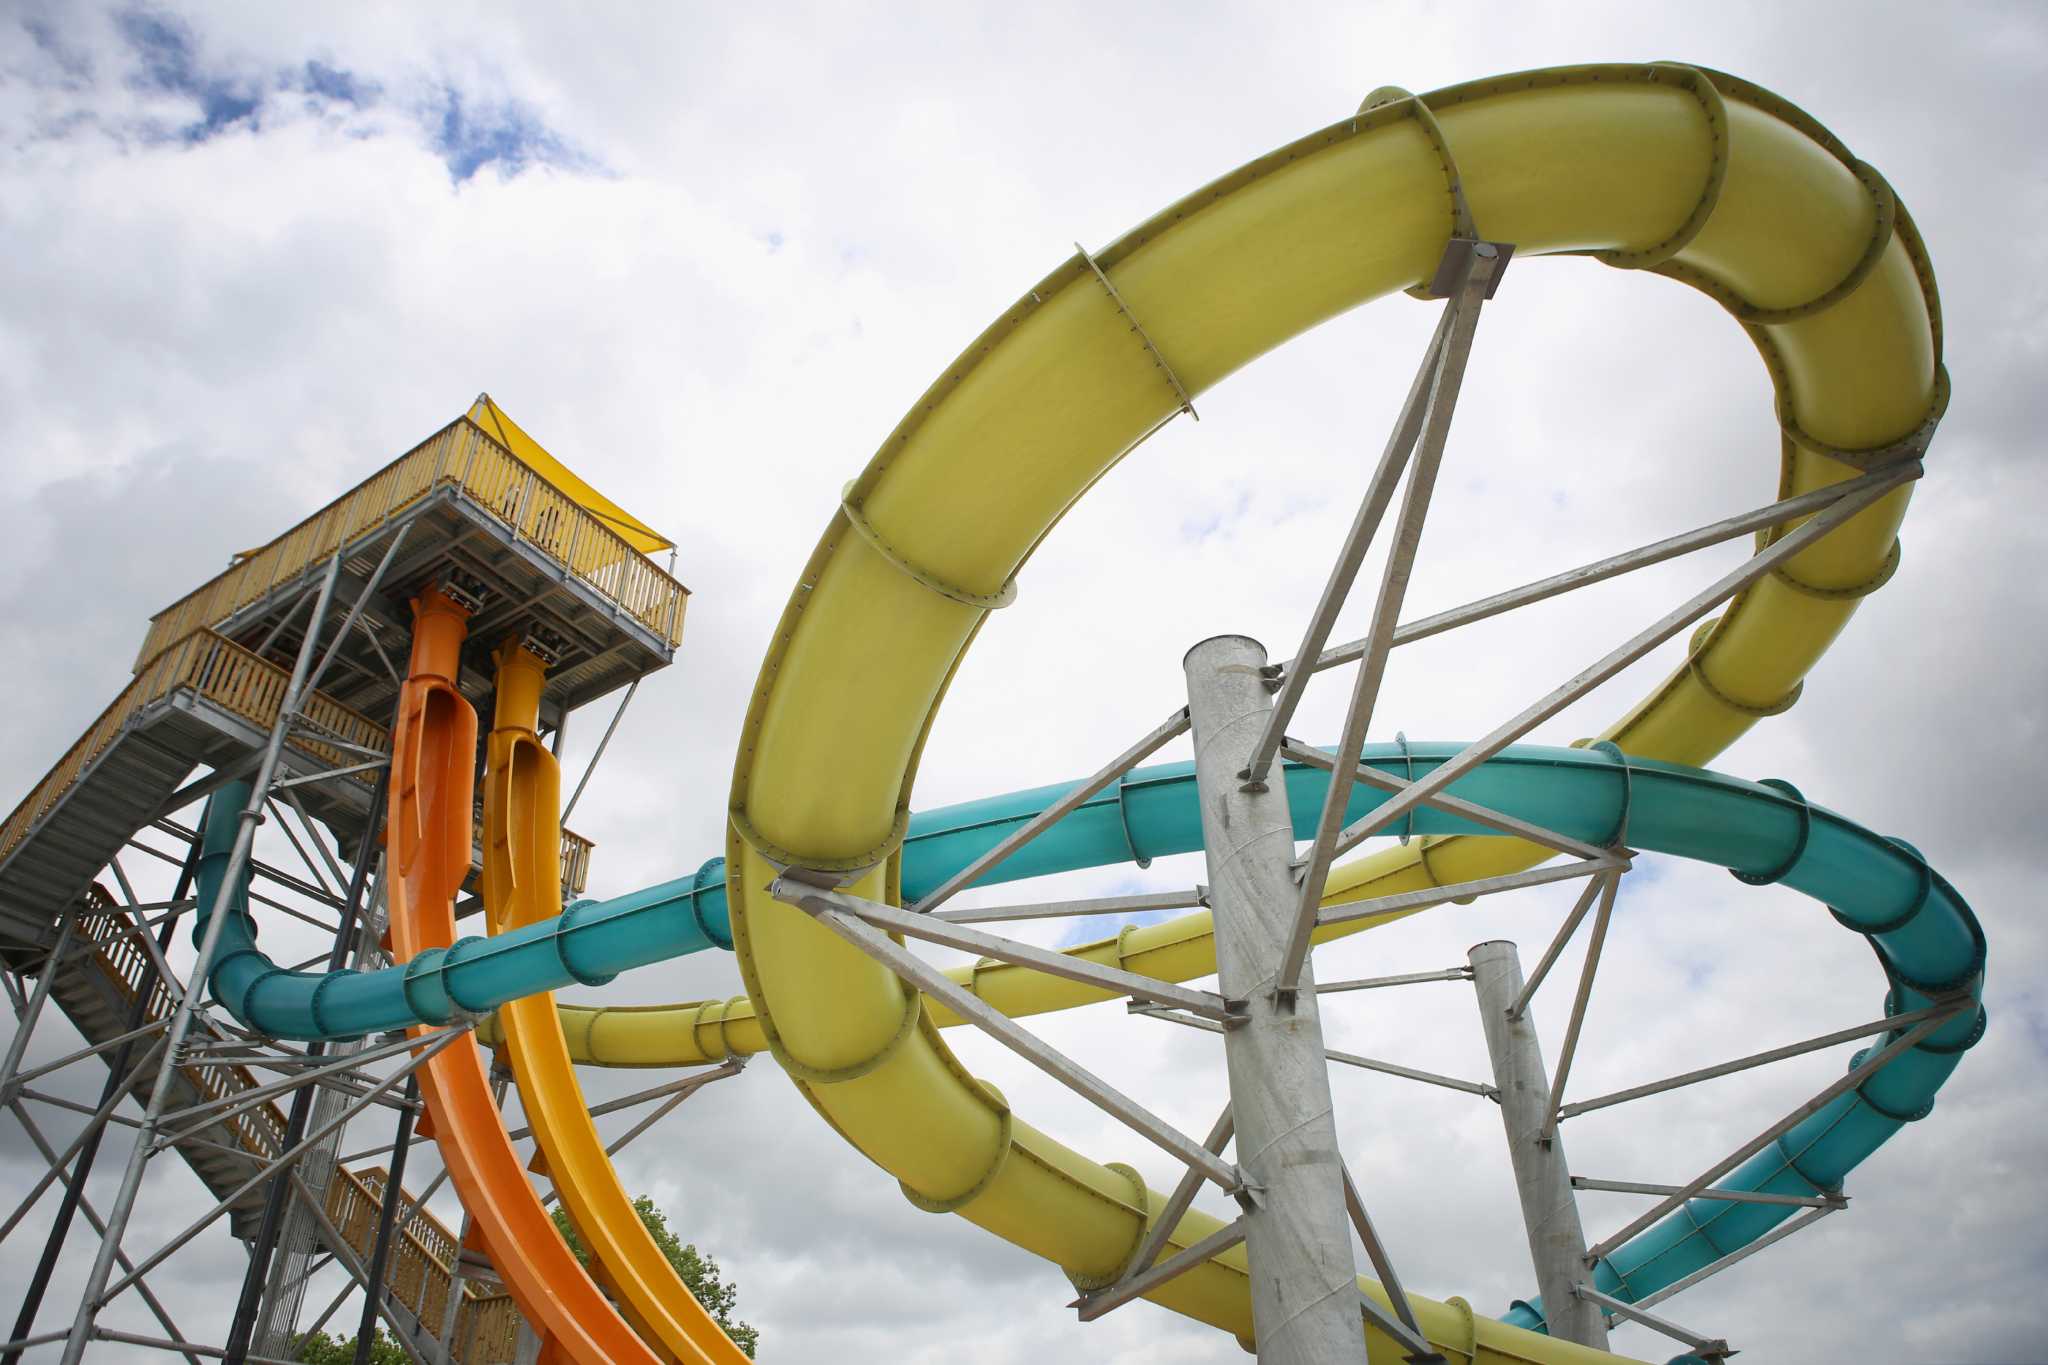 Six Flags Fiesta Texas unveils world's steepest water slide